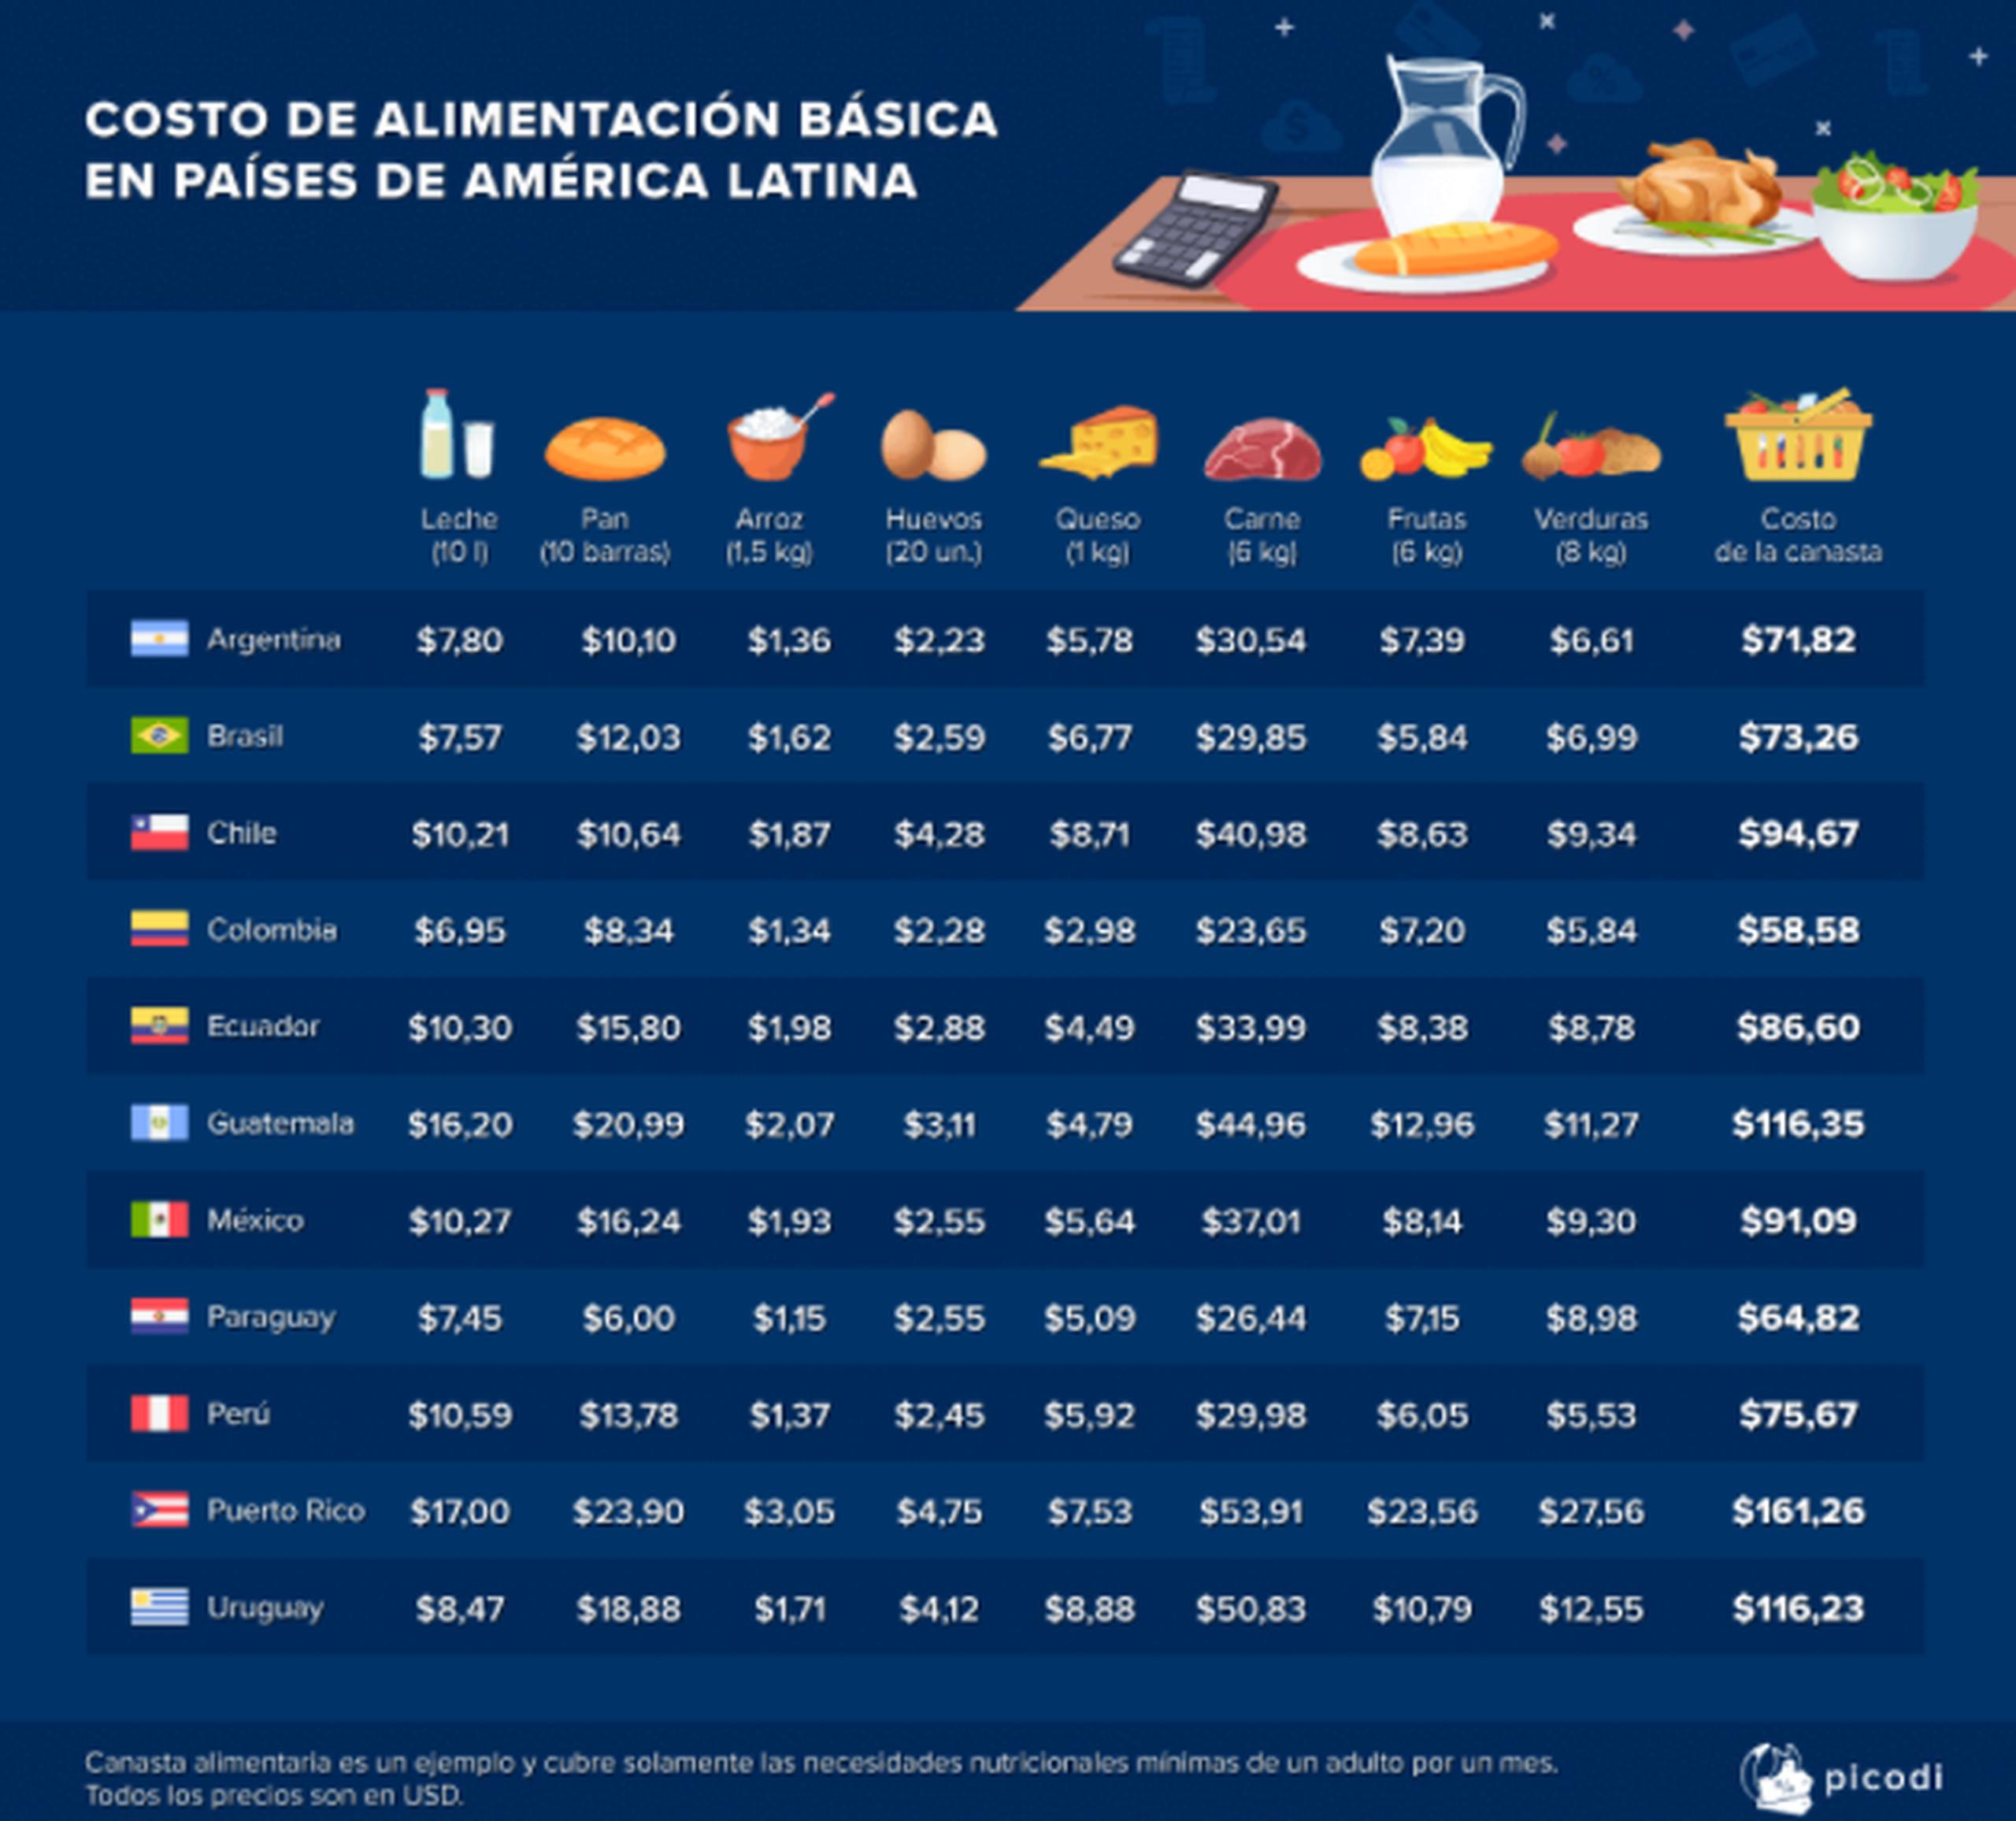 Costo de alimentación básica en países de América Latina.